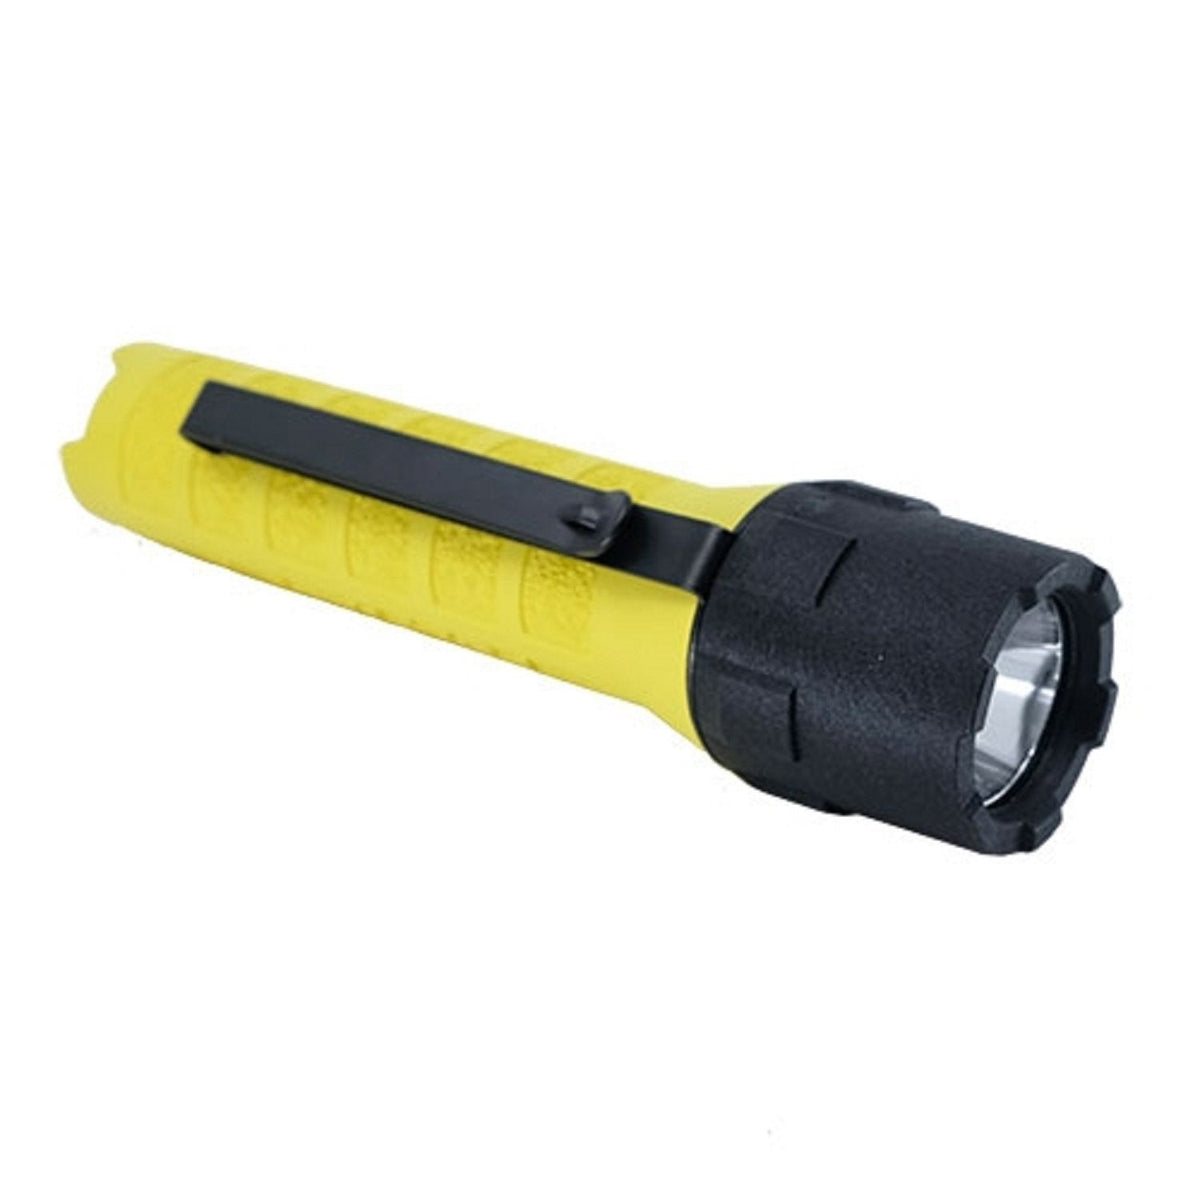 Streamlight PolyTac X USB 600-Lumens Rechargeable Flashlight Yellow Flashlights and Lighting Streamlight Tactical Gear Supplier Tactical Distributors Australia